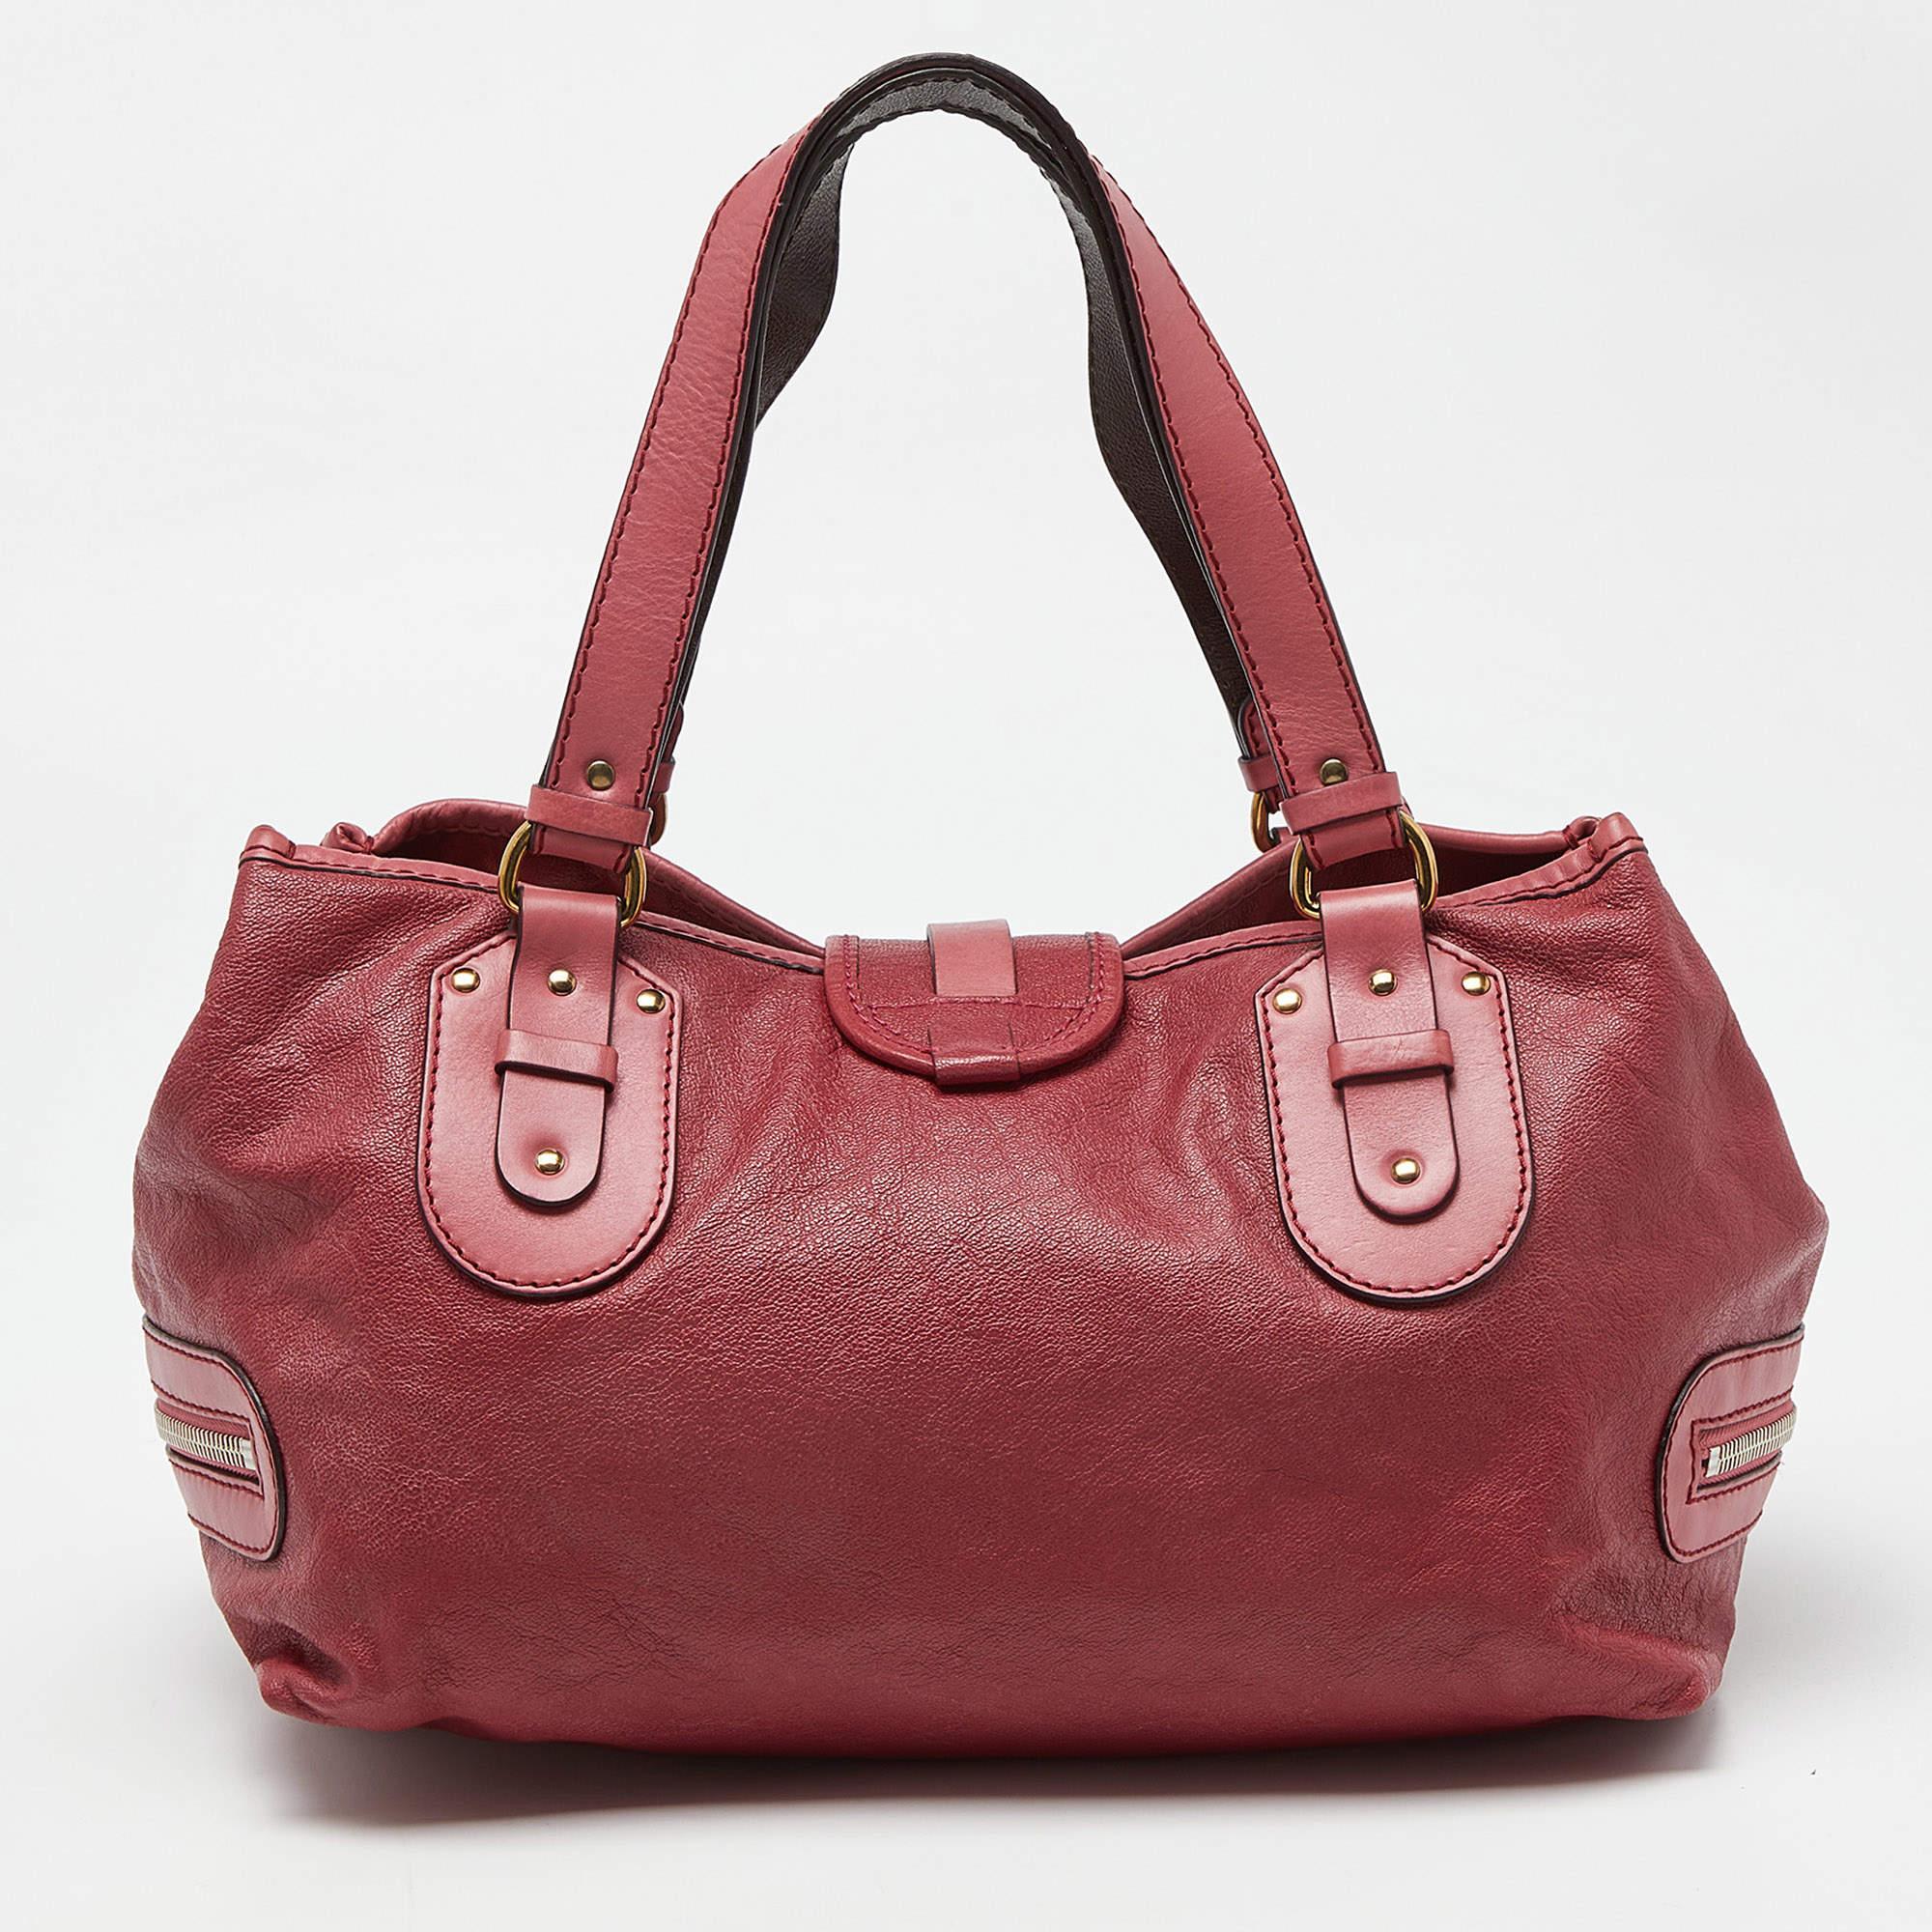 Chloe Pink/Brown Leather Paddington Satchel For Sale 7